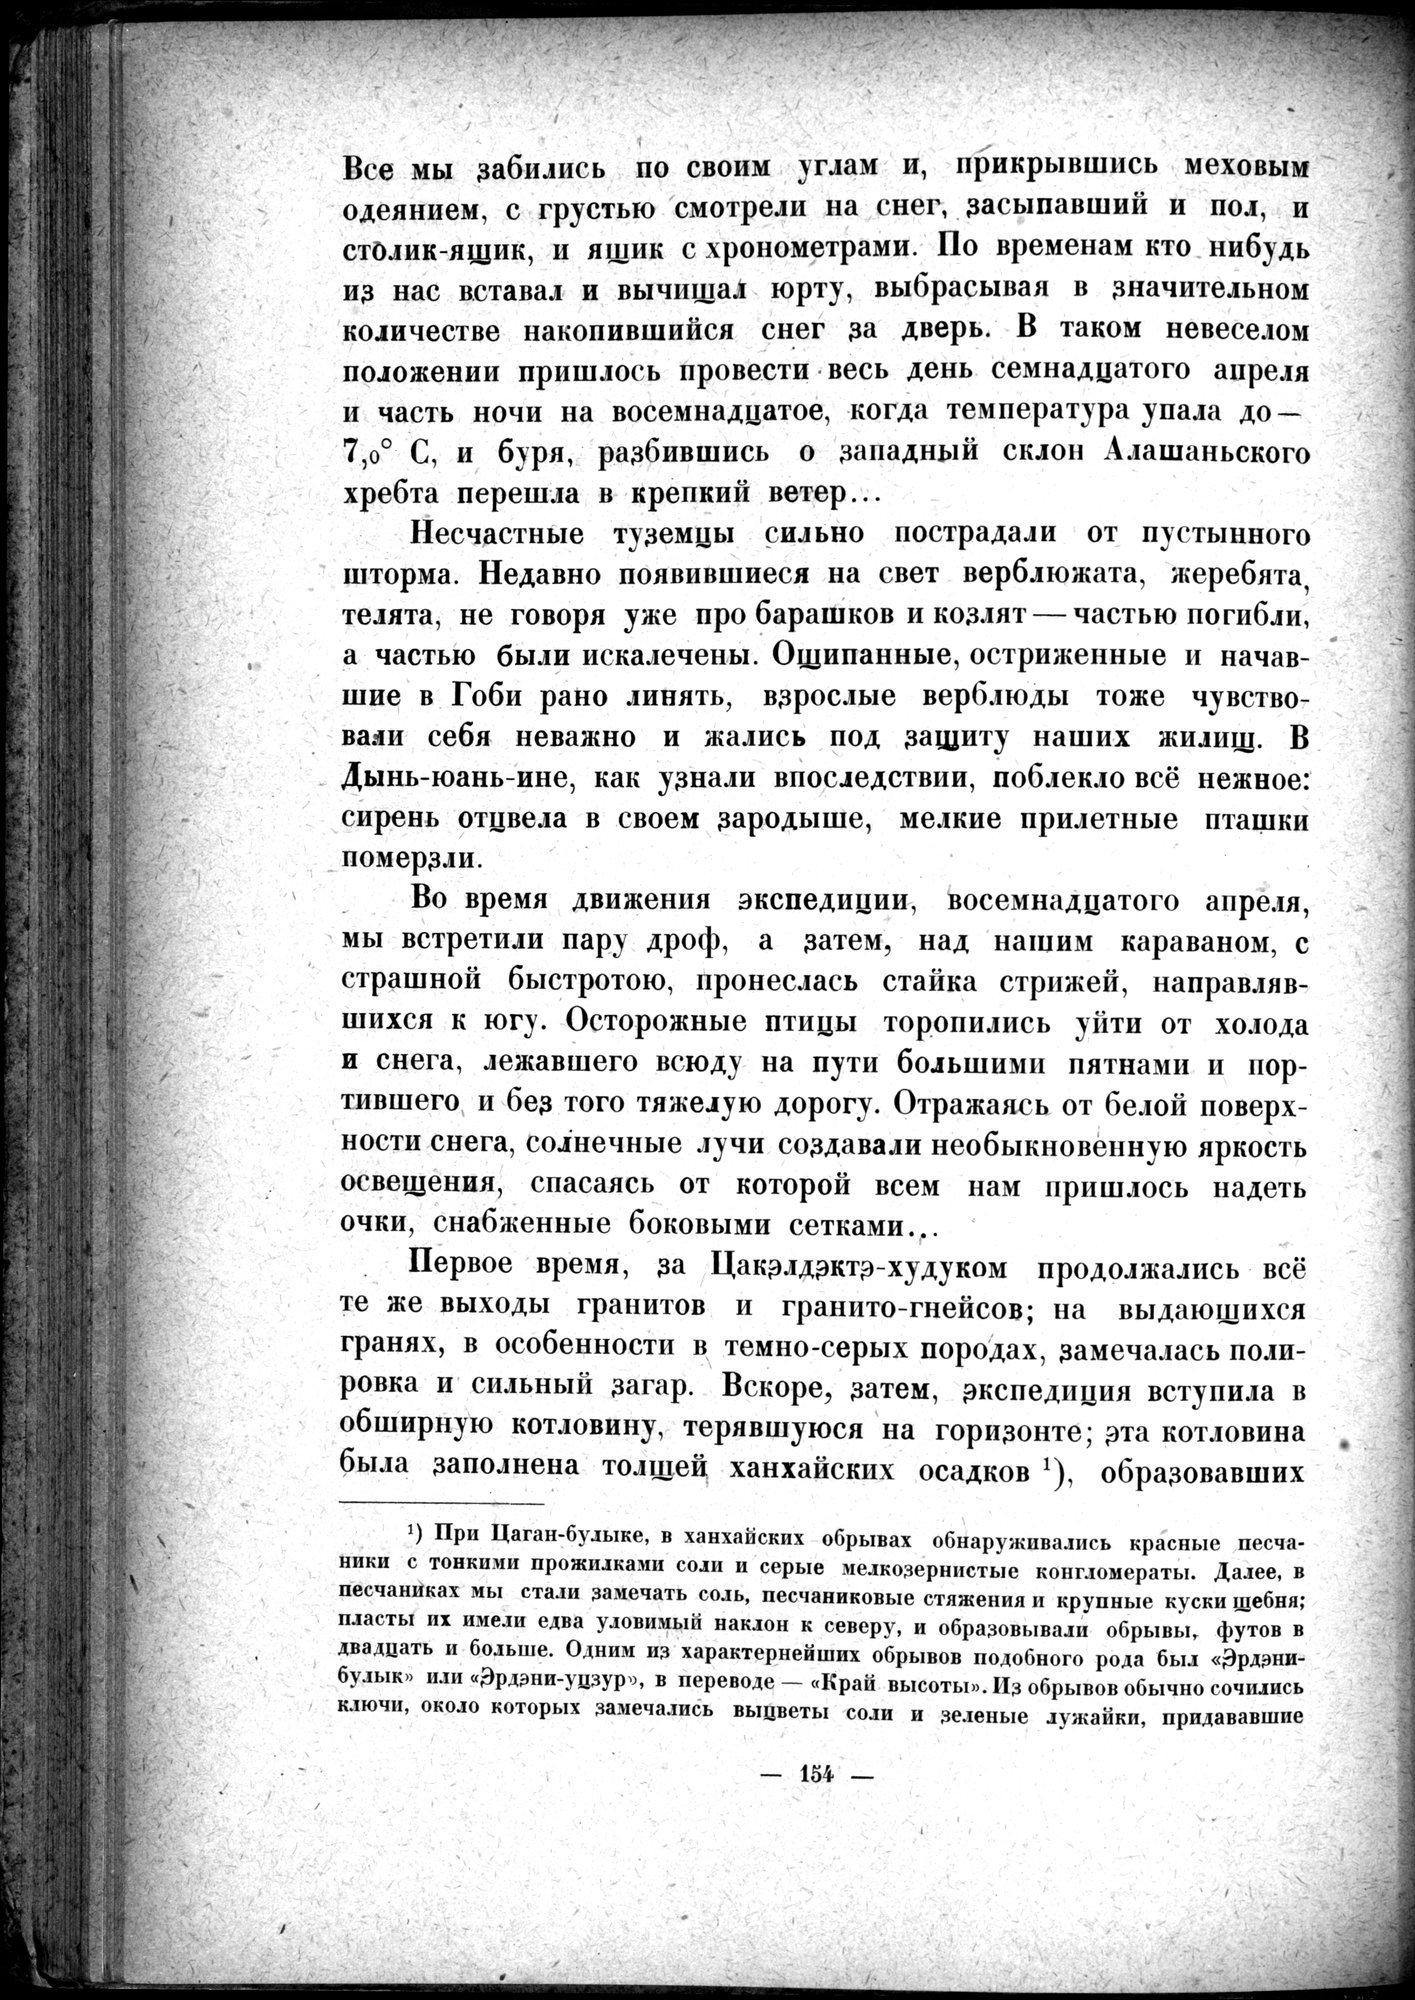 Mongoliya i Amdo i mertby gorod Khara-Khoto : vol.1 / Page 182 (Grayscale High Resolution Image)